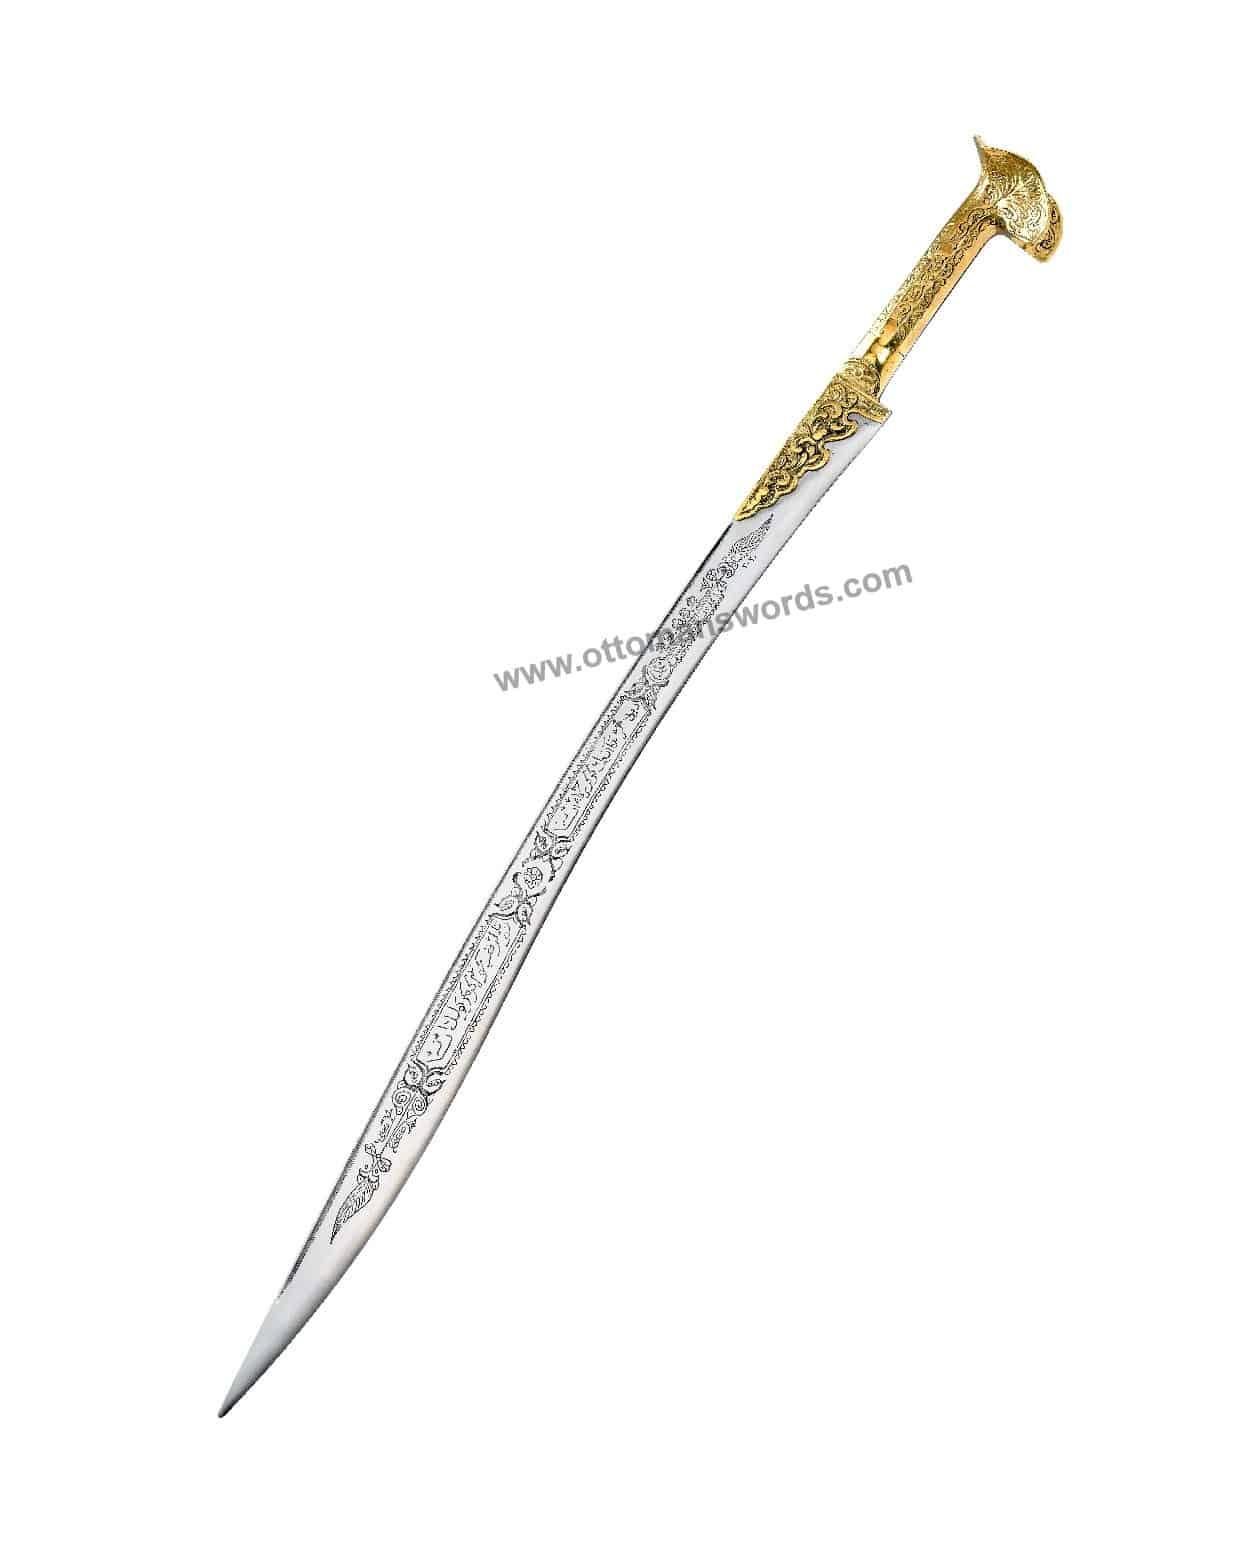 yatagan sword for sale